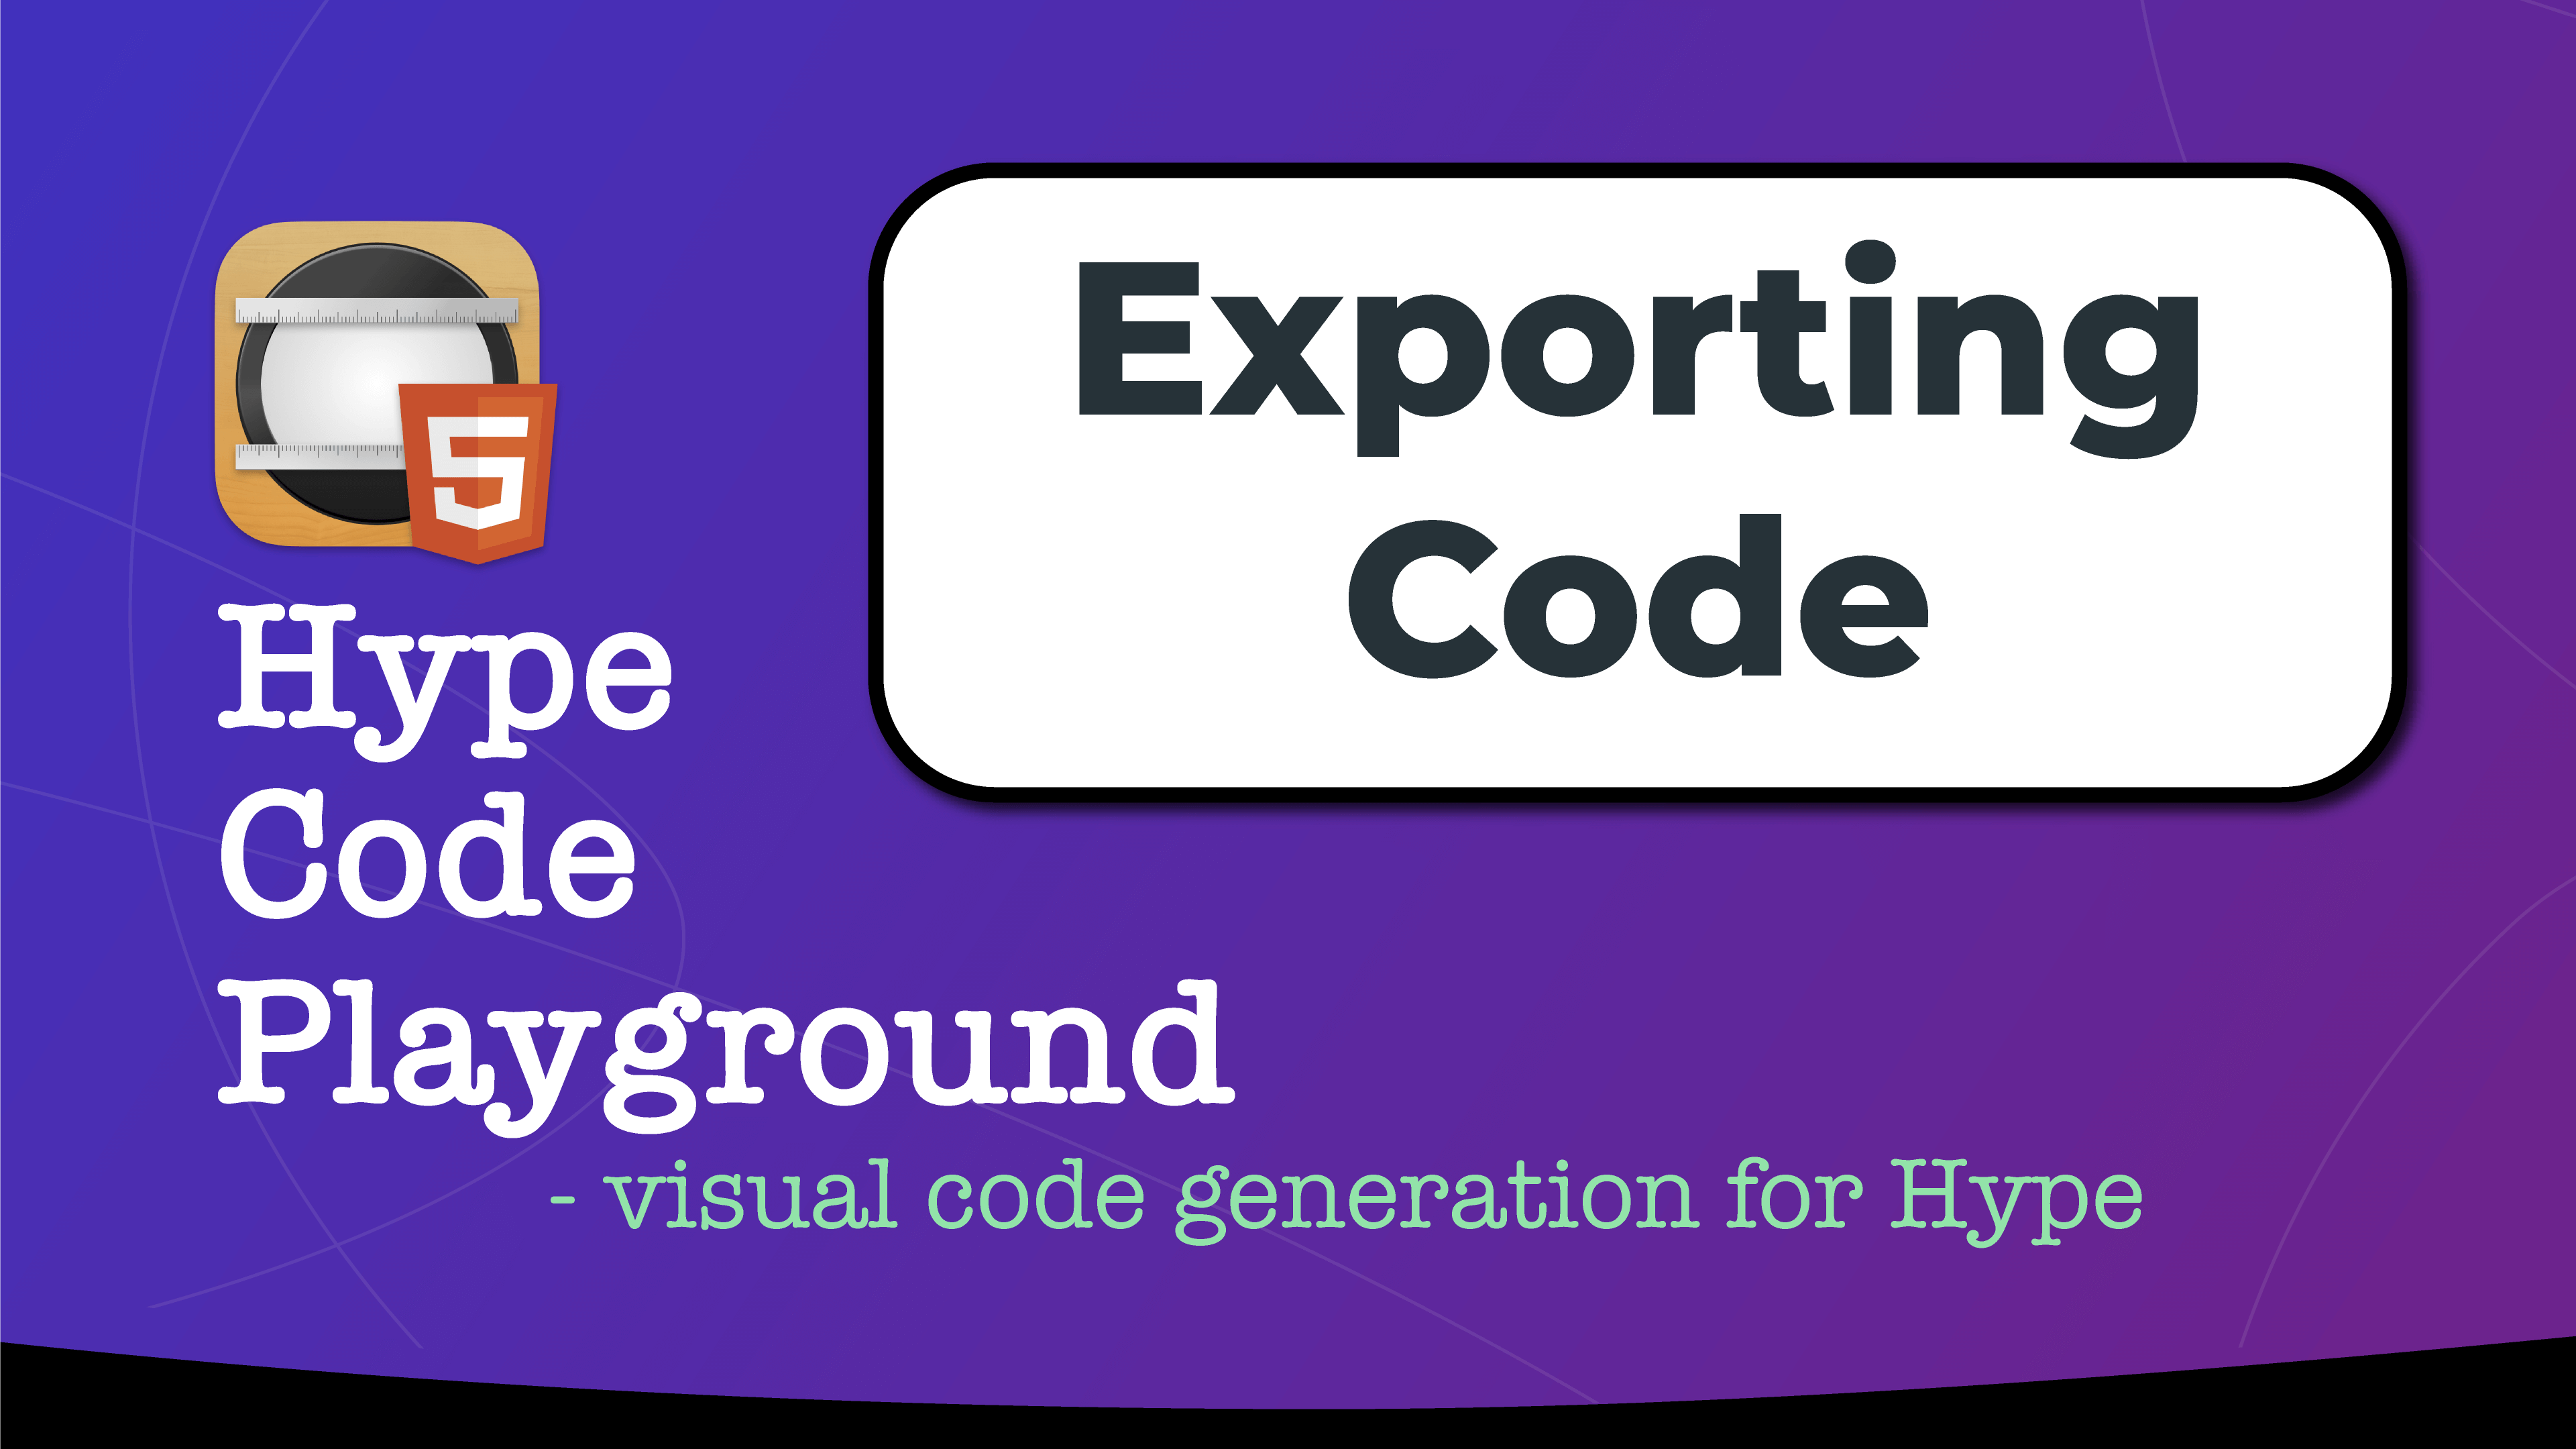 Exporting Code video thumbnail